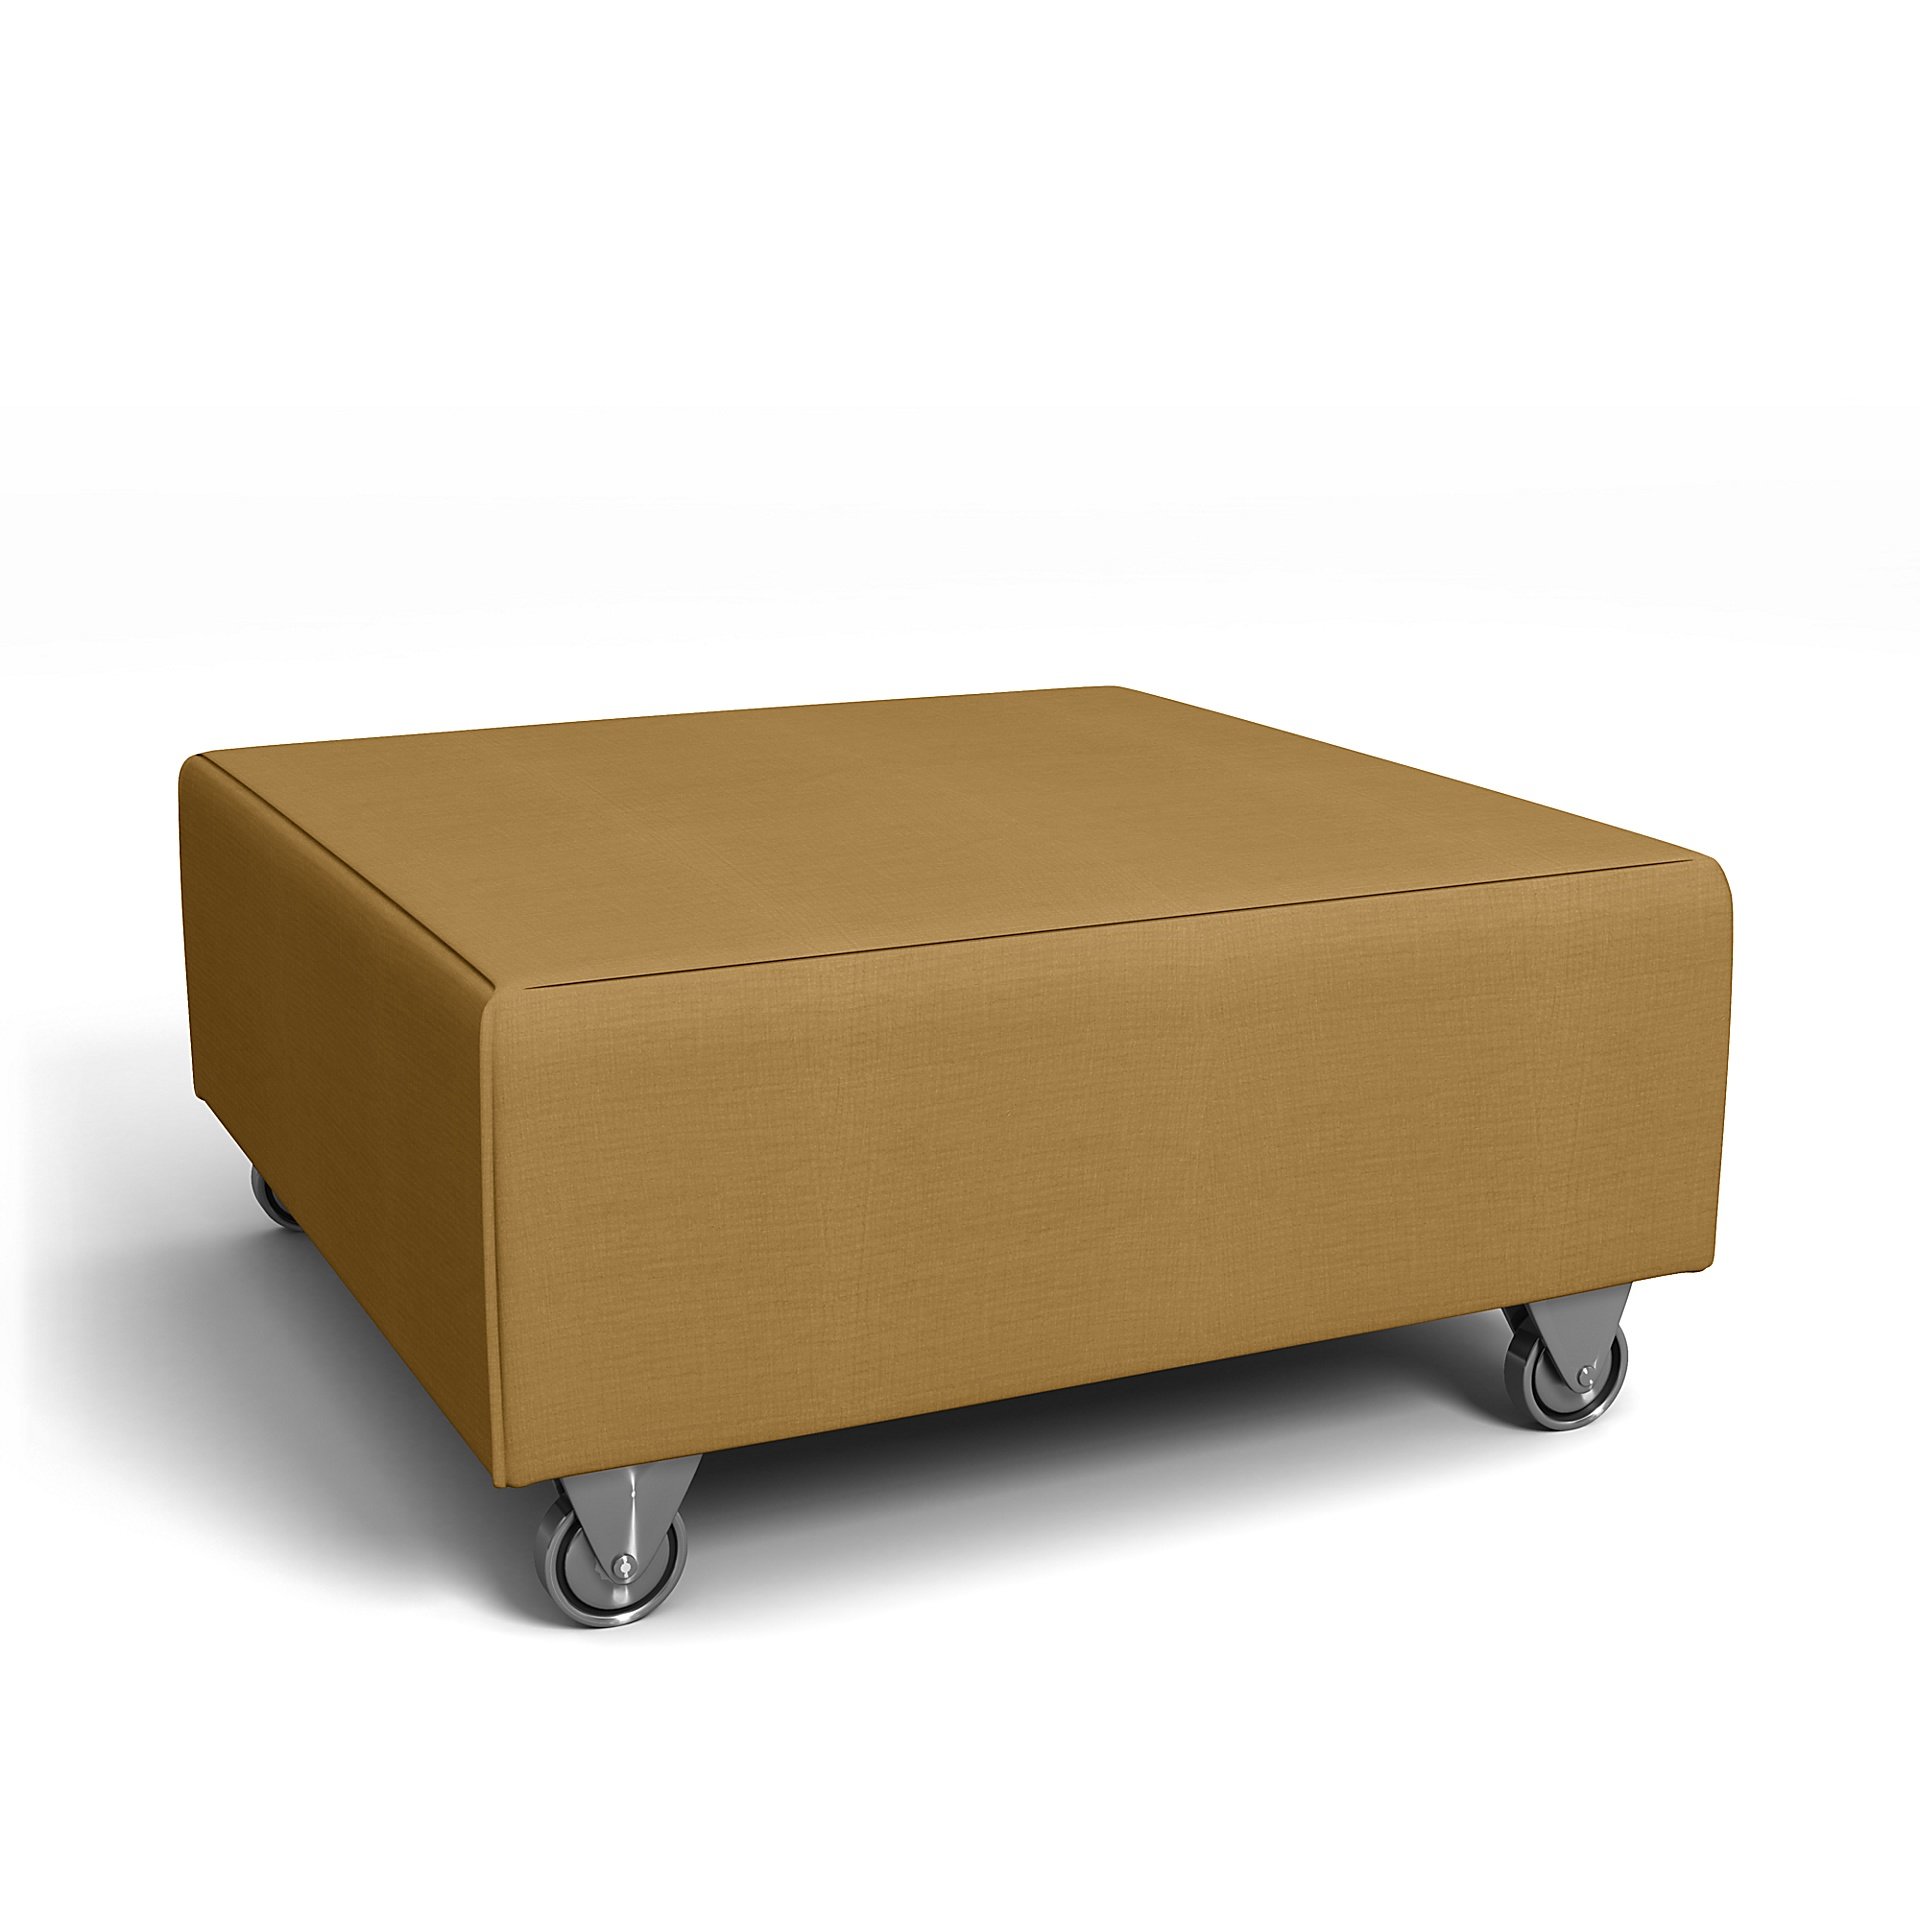 IKEA - Falsterbo Footstool Cover, Dusty Yellow, Linen - Bemz